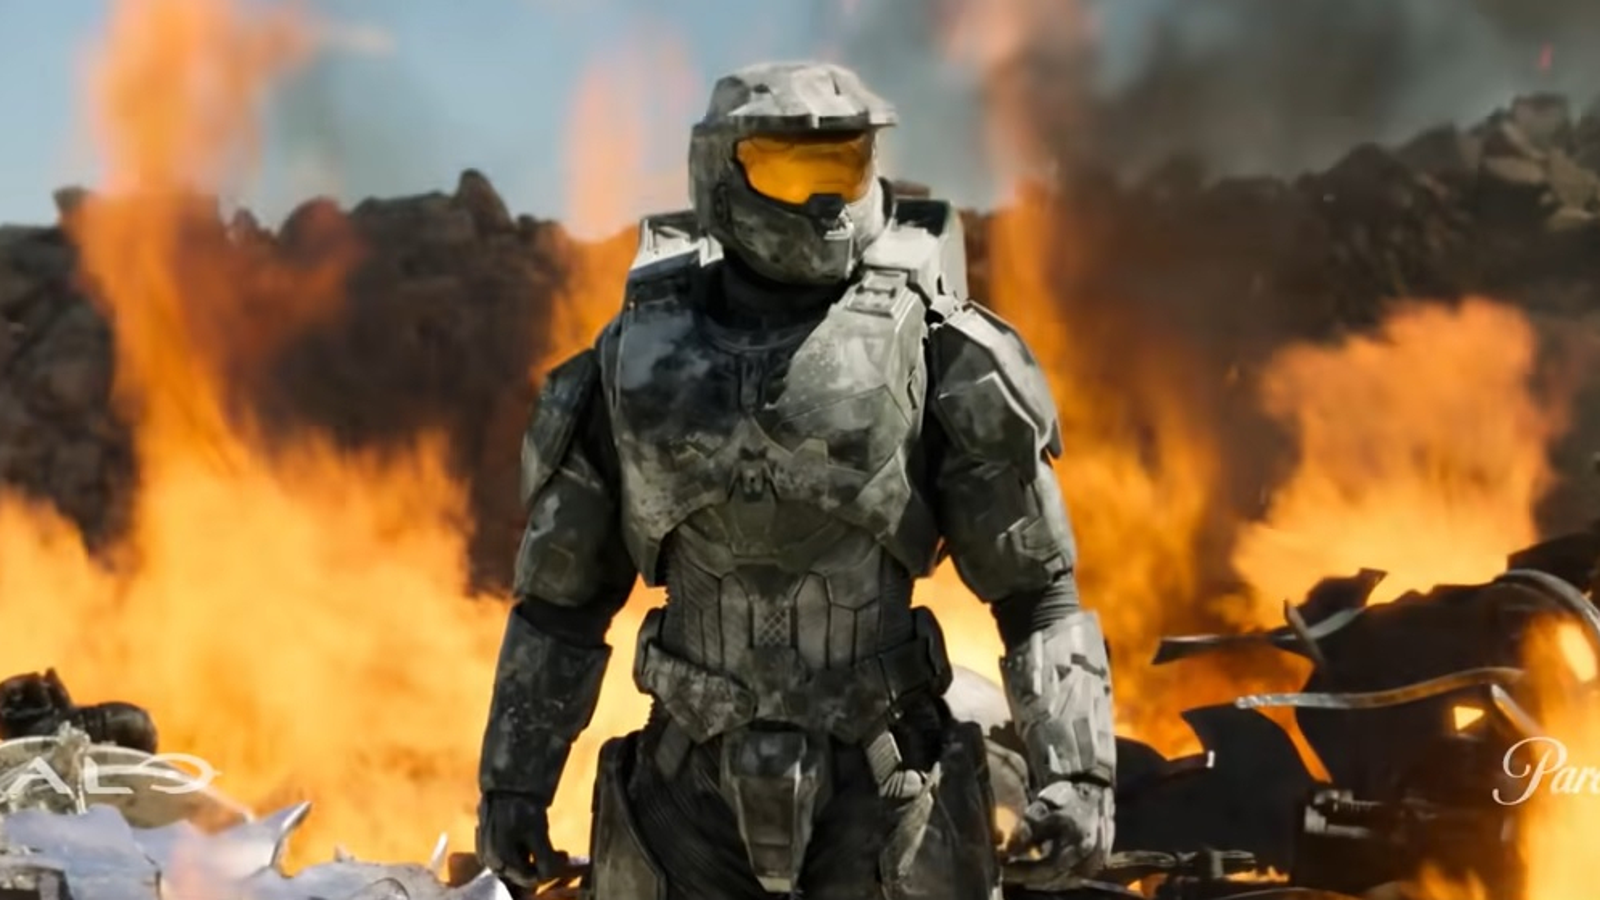 Halo' TV series content coming to 'Halo Infinite' - The Washington Post